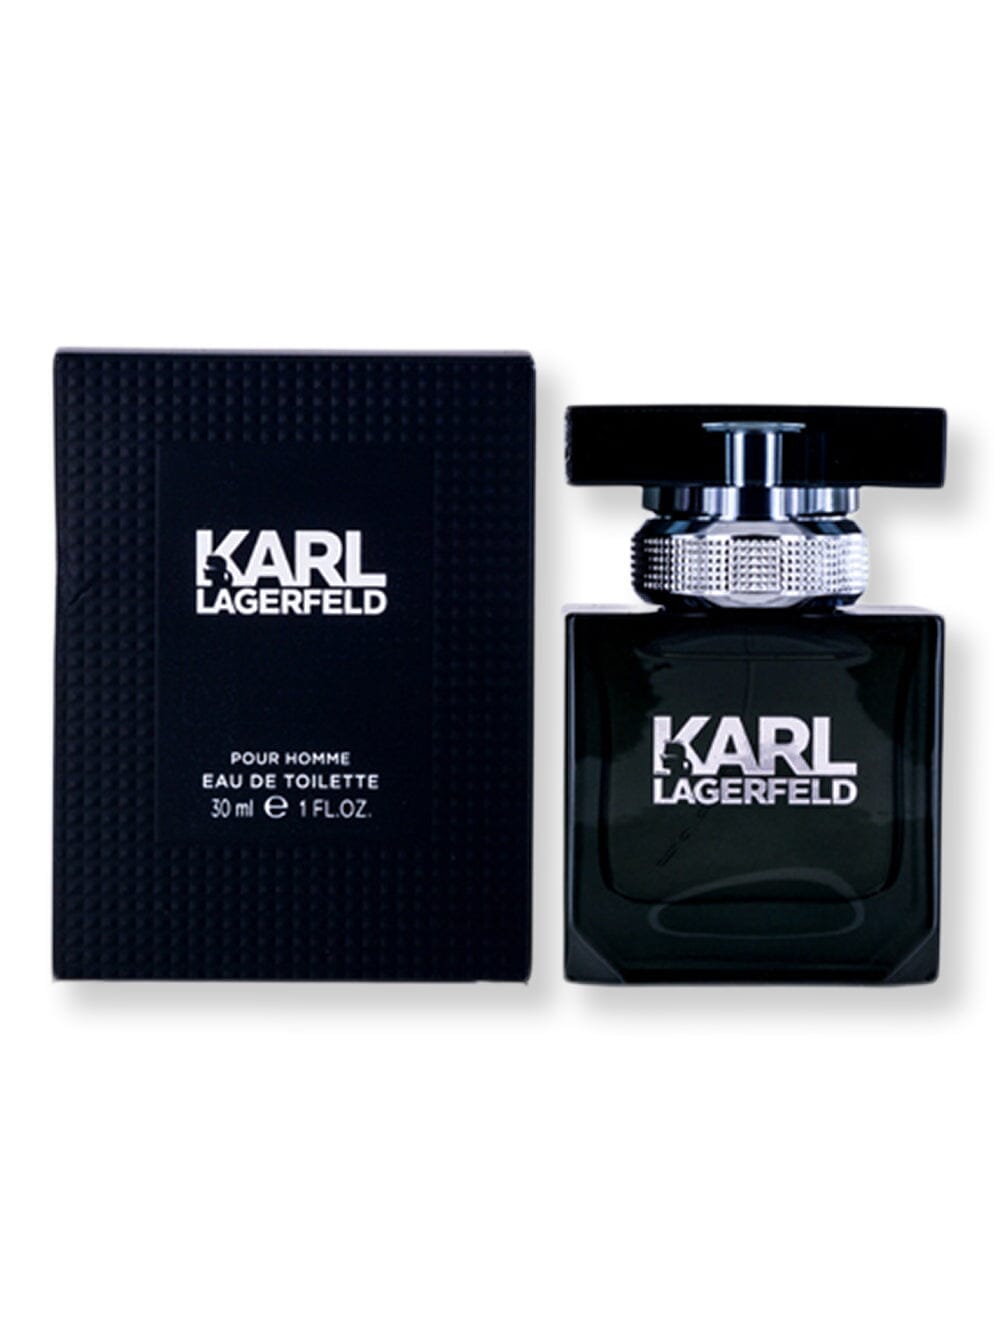 KARL LAGERFELD KARL LAGERFELD Pour Homme EDT Spray 1 oz30 ml Perfume 